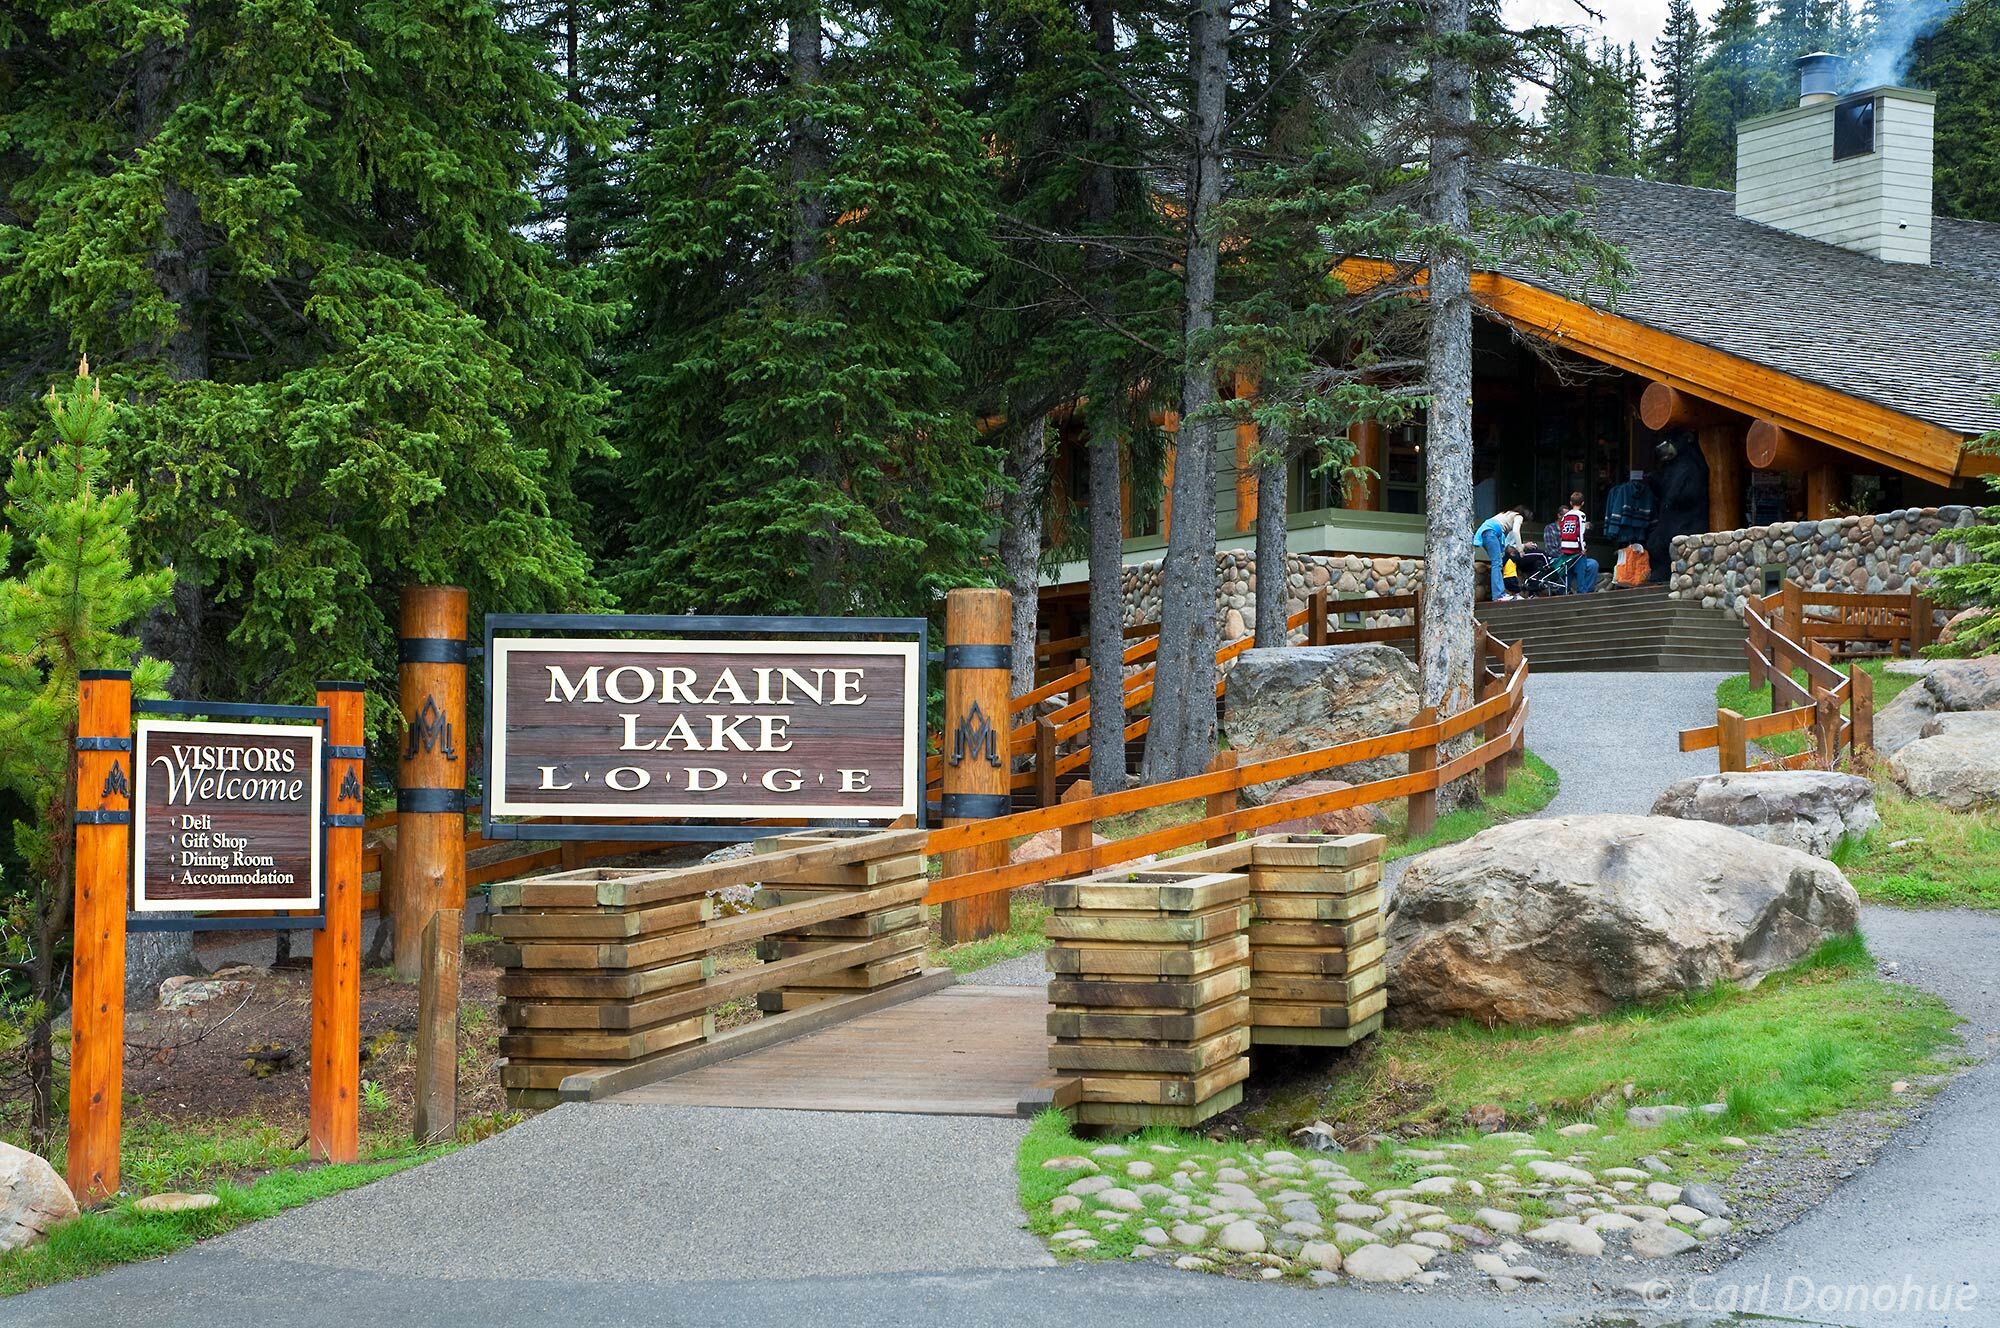 Popular tourist destination Moraine Lake has a wonderful lodge, the Moraiine Lake lodge, for tourists to shop, eat, browse and...